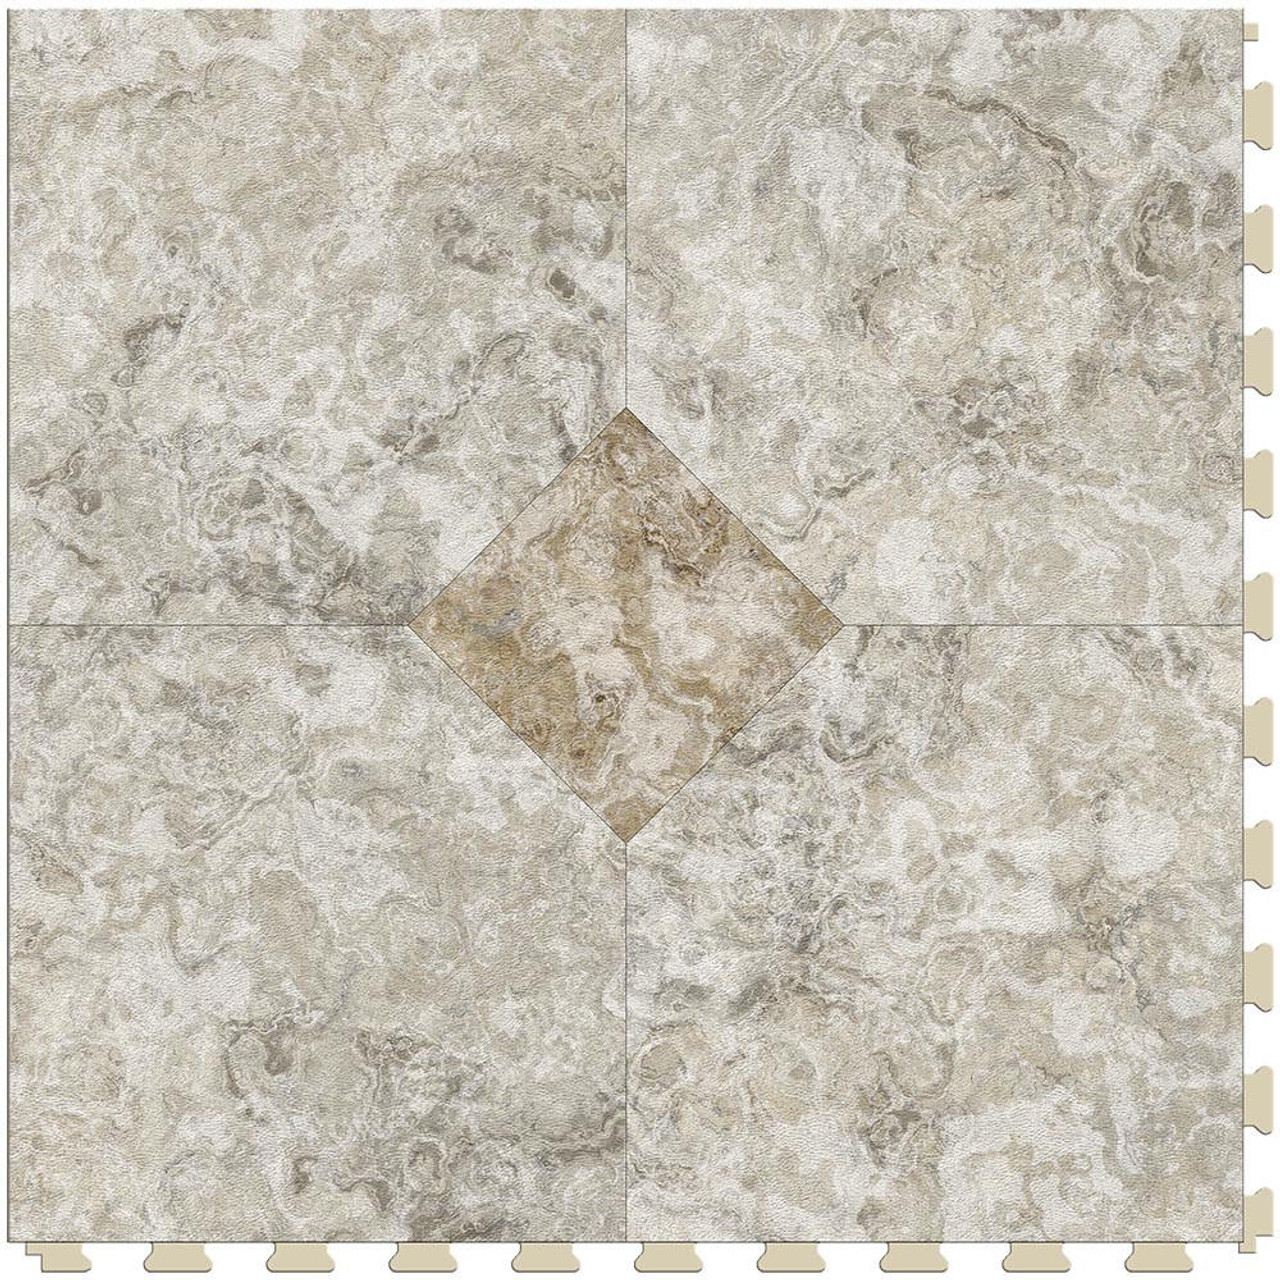 Perfection Floor Tile Natural Stone - Breccia Collection or 6 Tiles/ Case or 16.62 SQFT/ Case